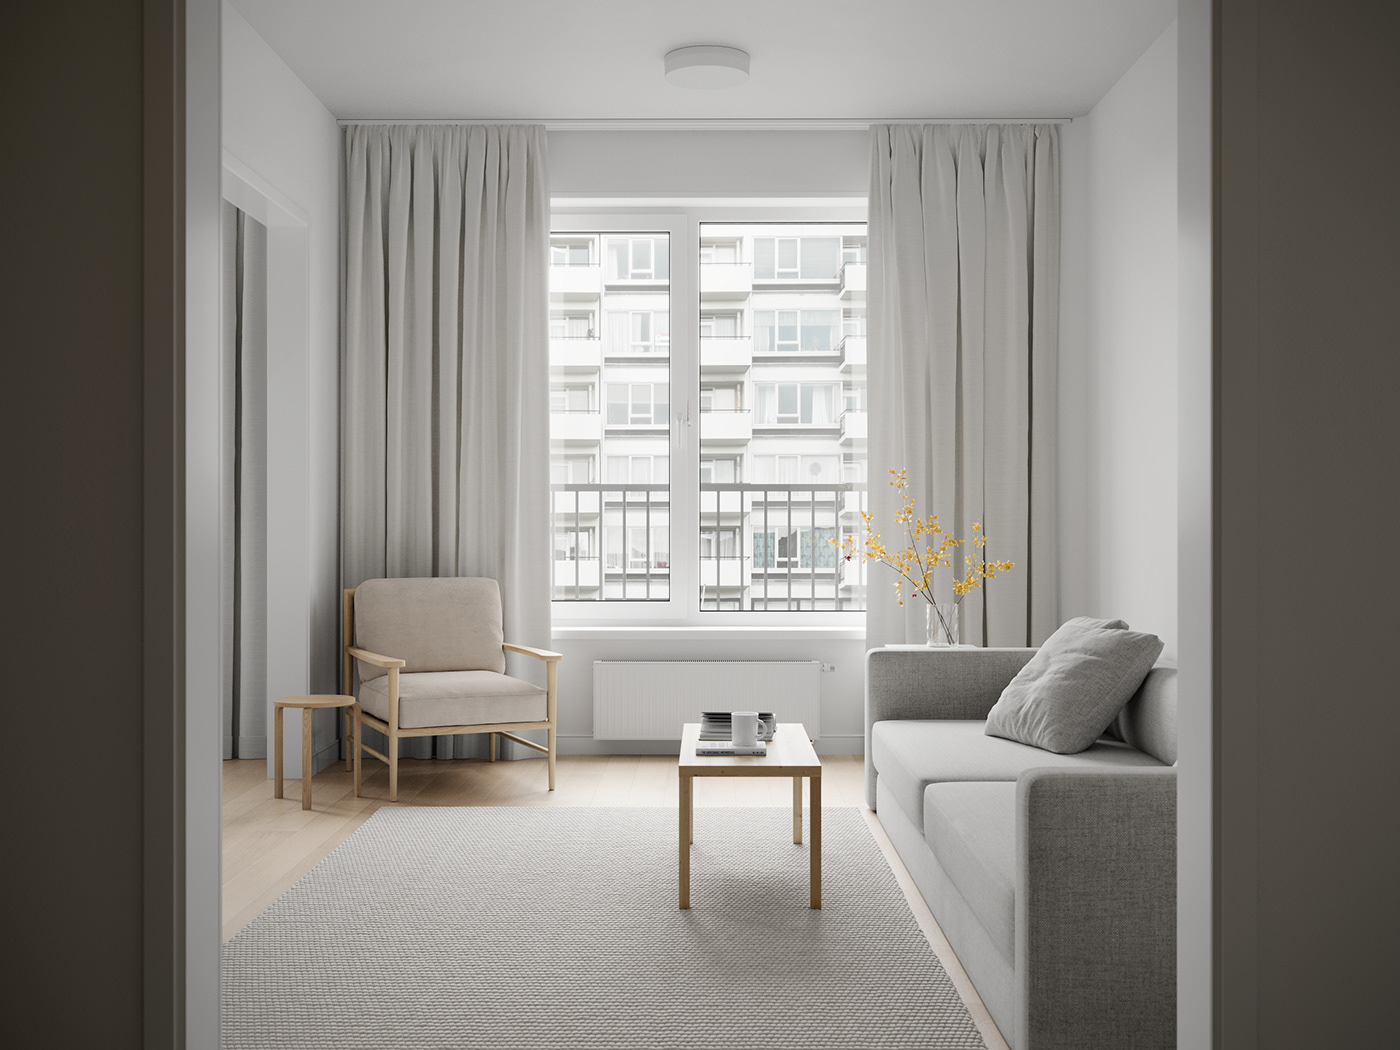 3ds max archviz CGI corona render  Interior interior design  Minimalism minimalist Render visualization